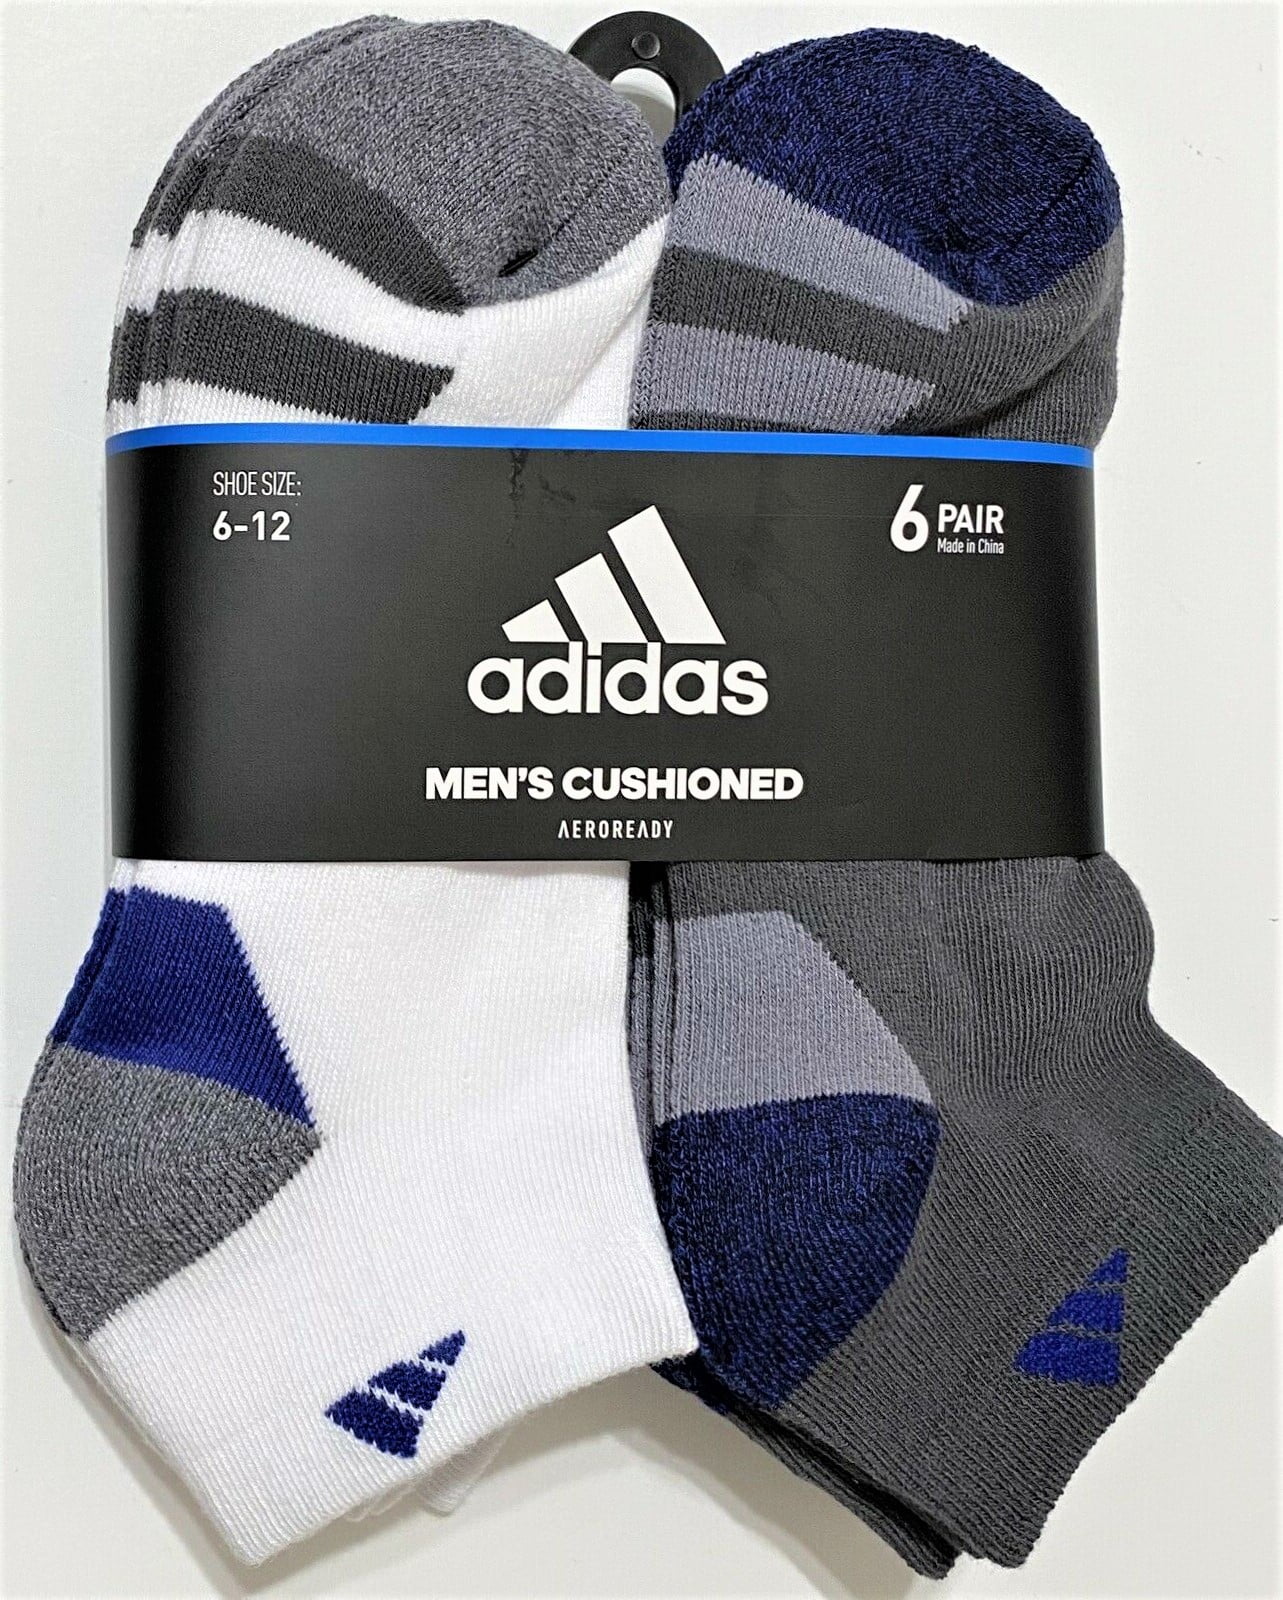 Adidas - ADIDAS SOCKS MEN'S - LOW CUT SOCKS - LARGE (6-12) GREY WHITE ...